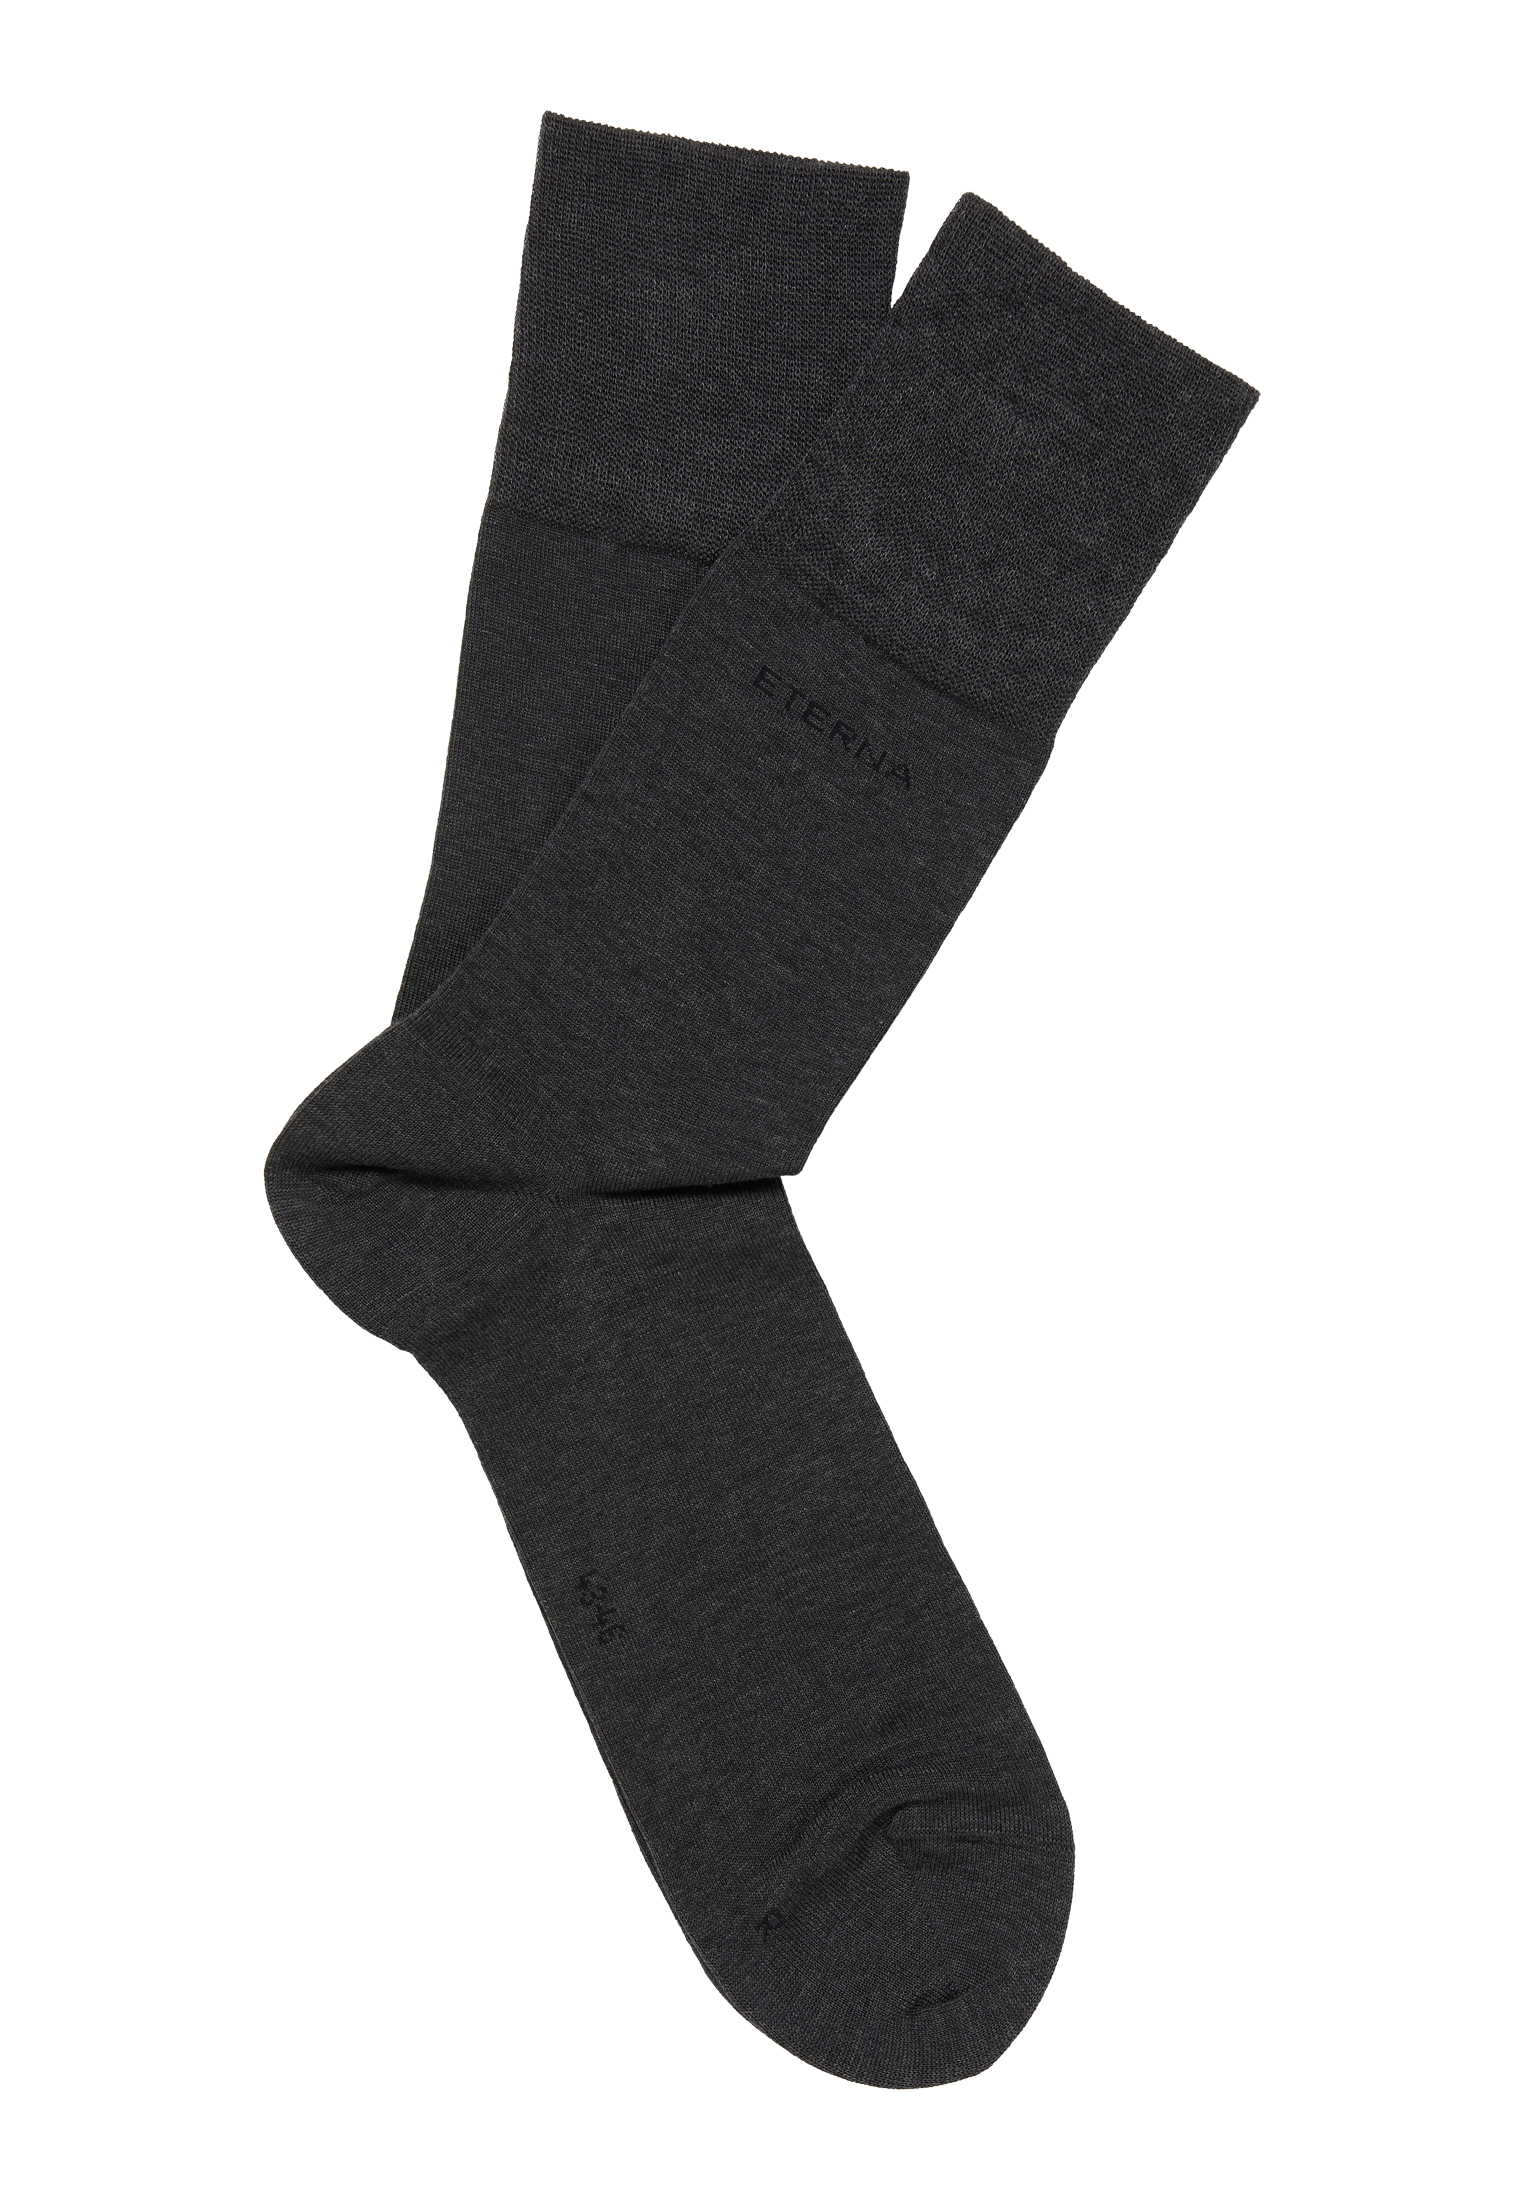 Socks in anthracite plain